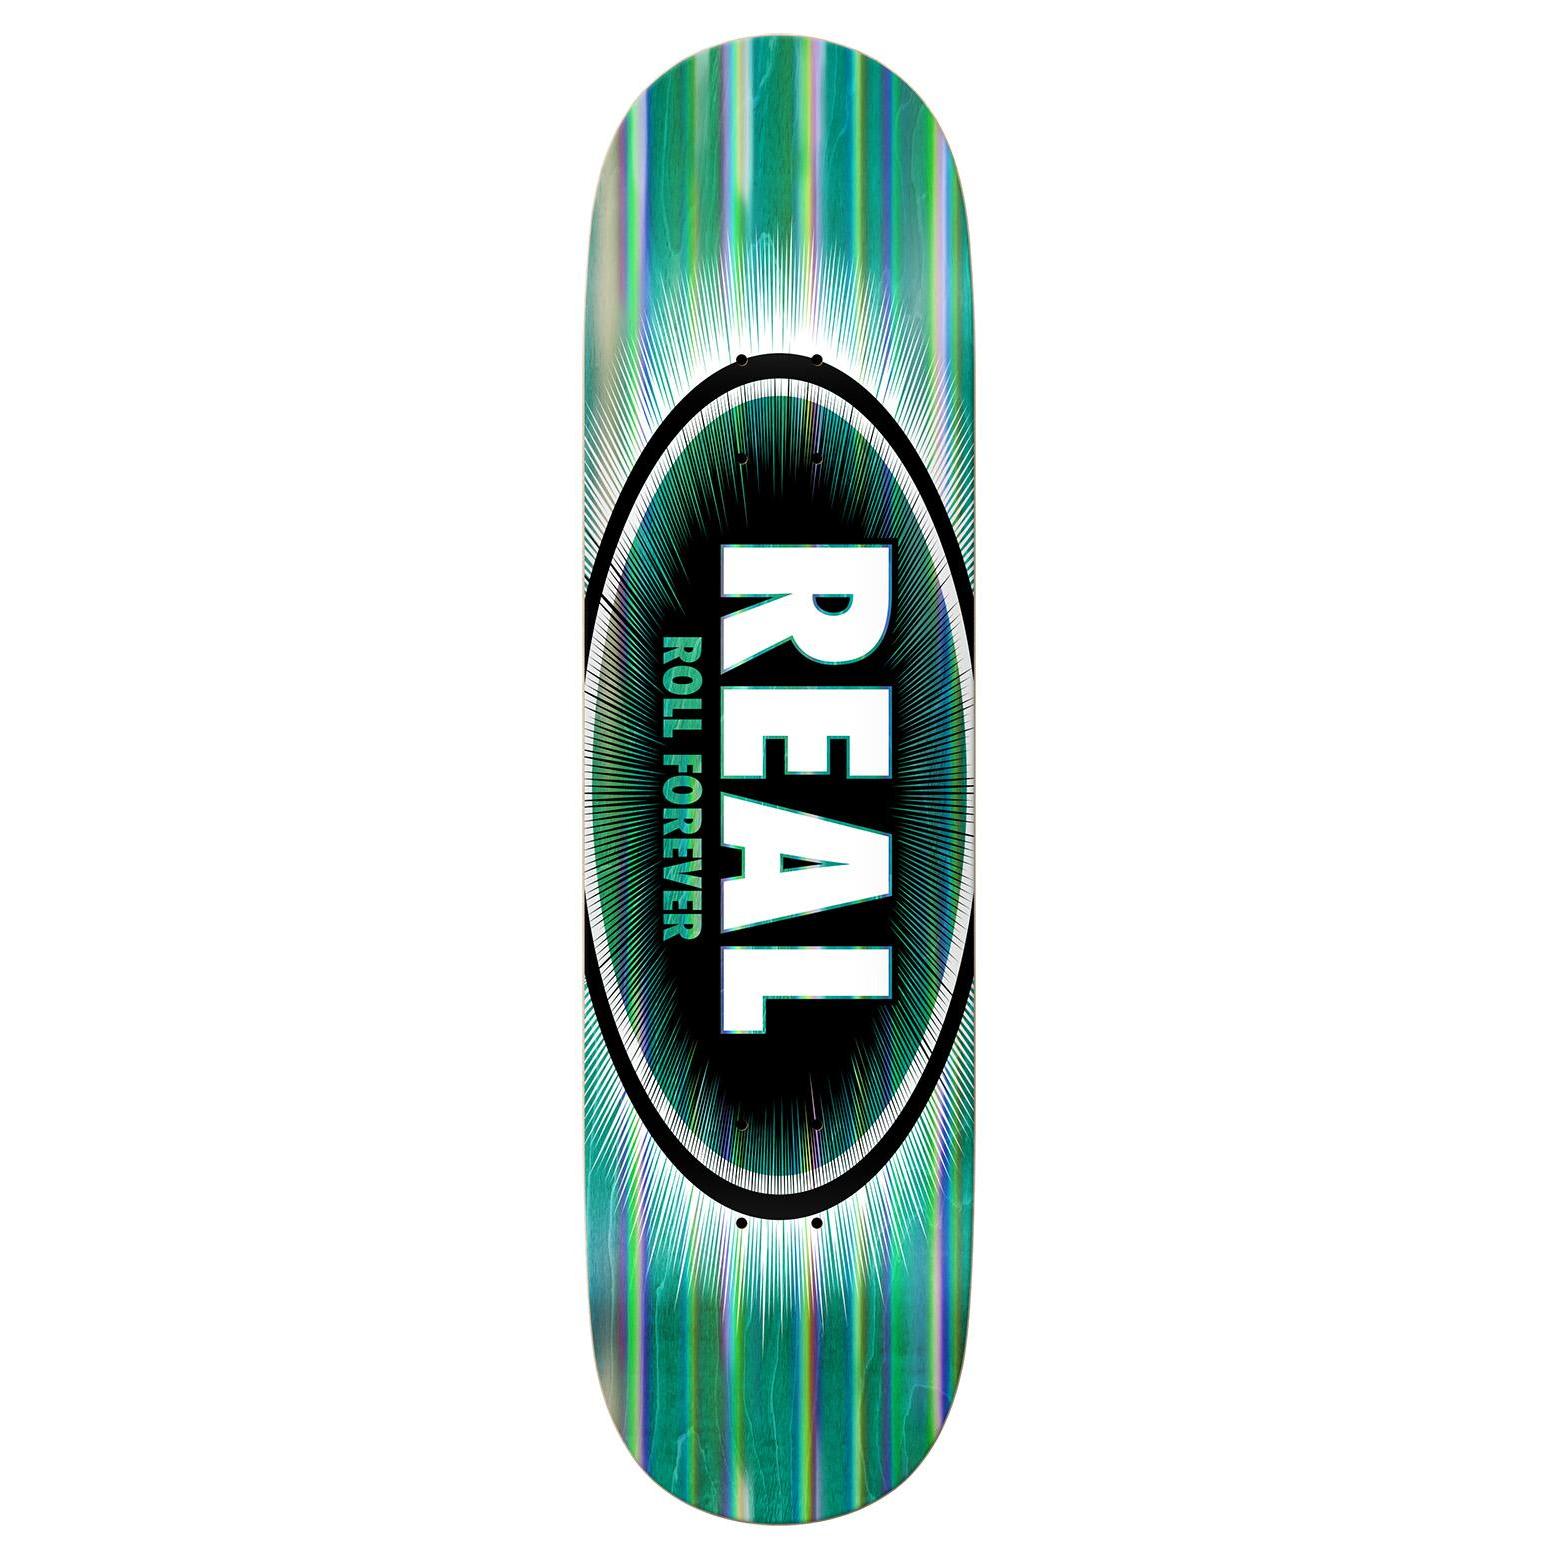 Real Eclipse Deck Planche de skateboard 8 0